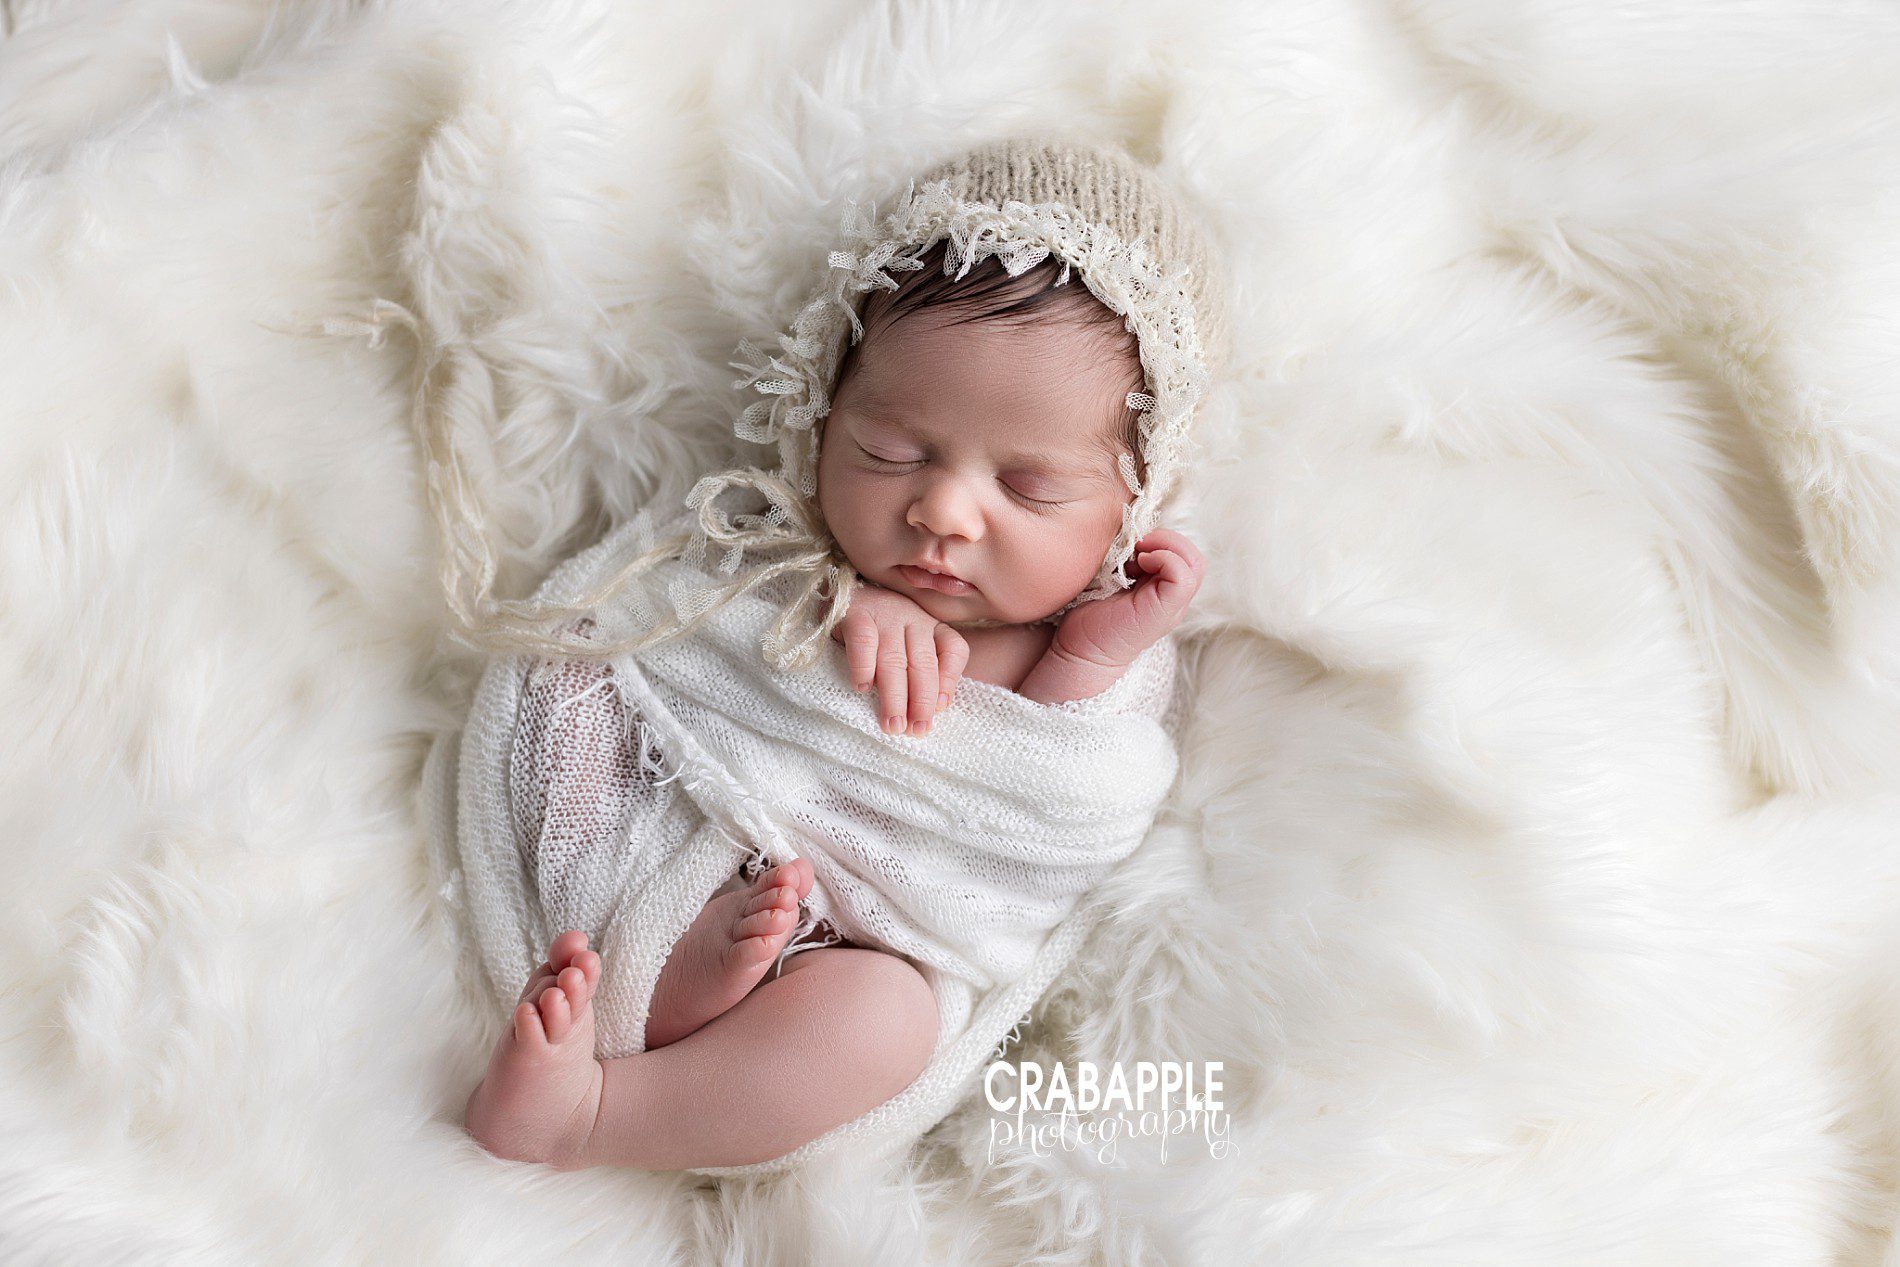 monochromatic styling ideas using white for newborn photos